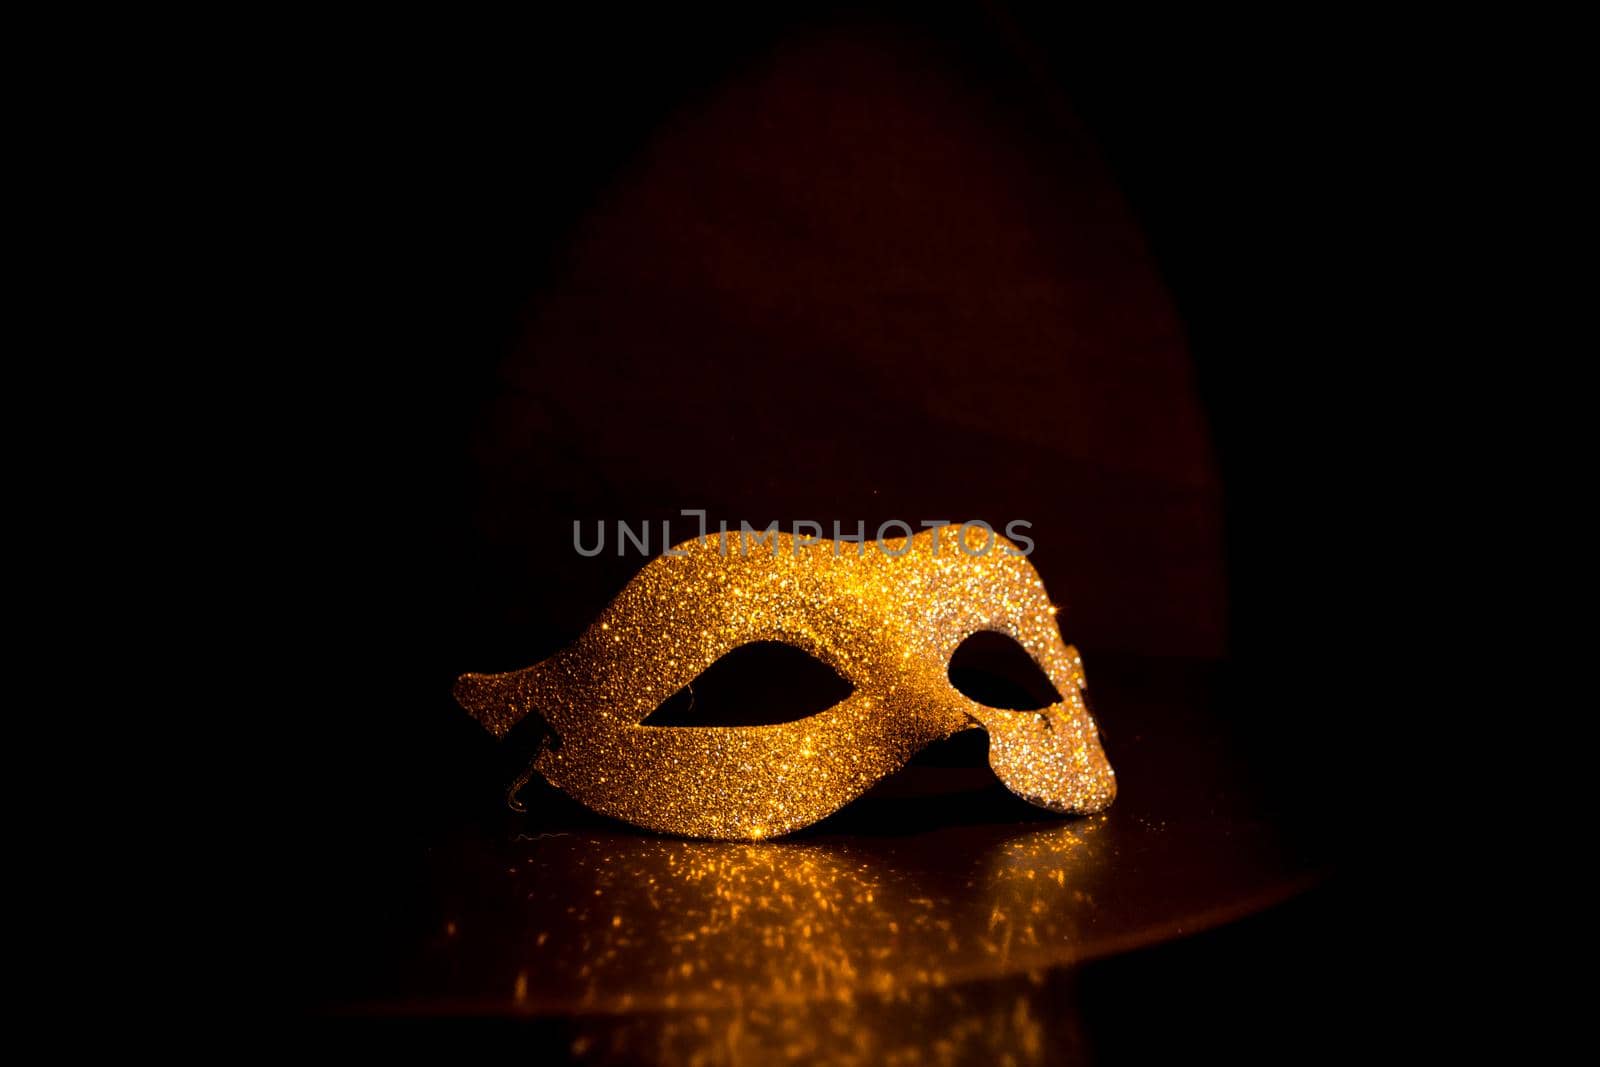 golden carnival mask under a halo of light on a black background